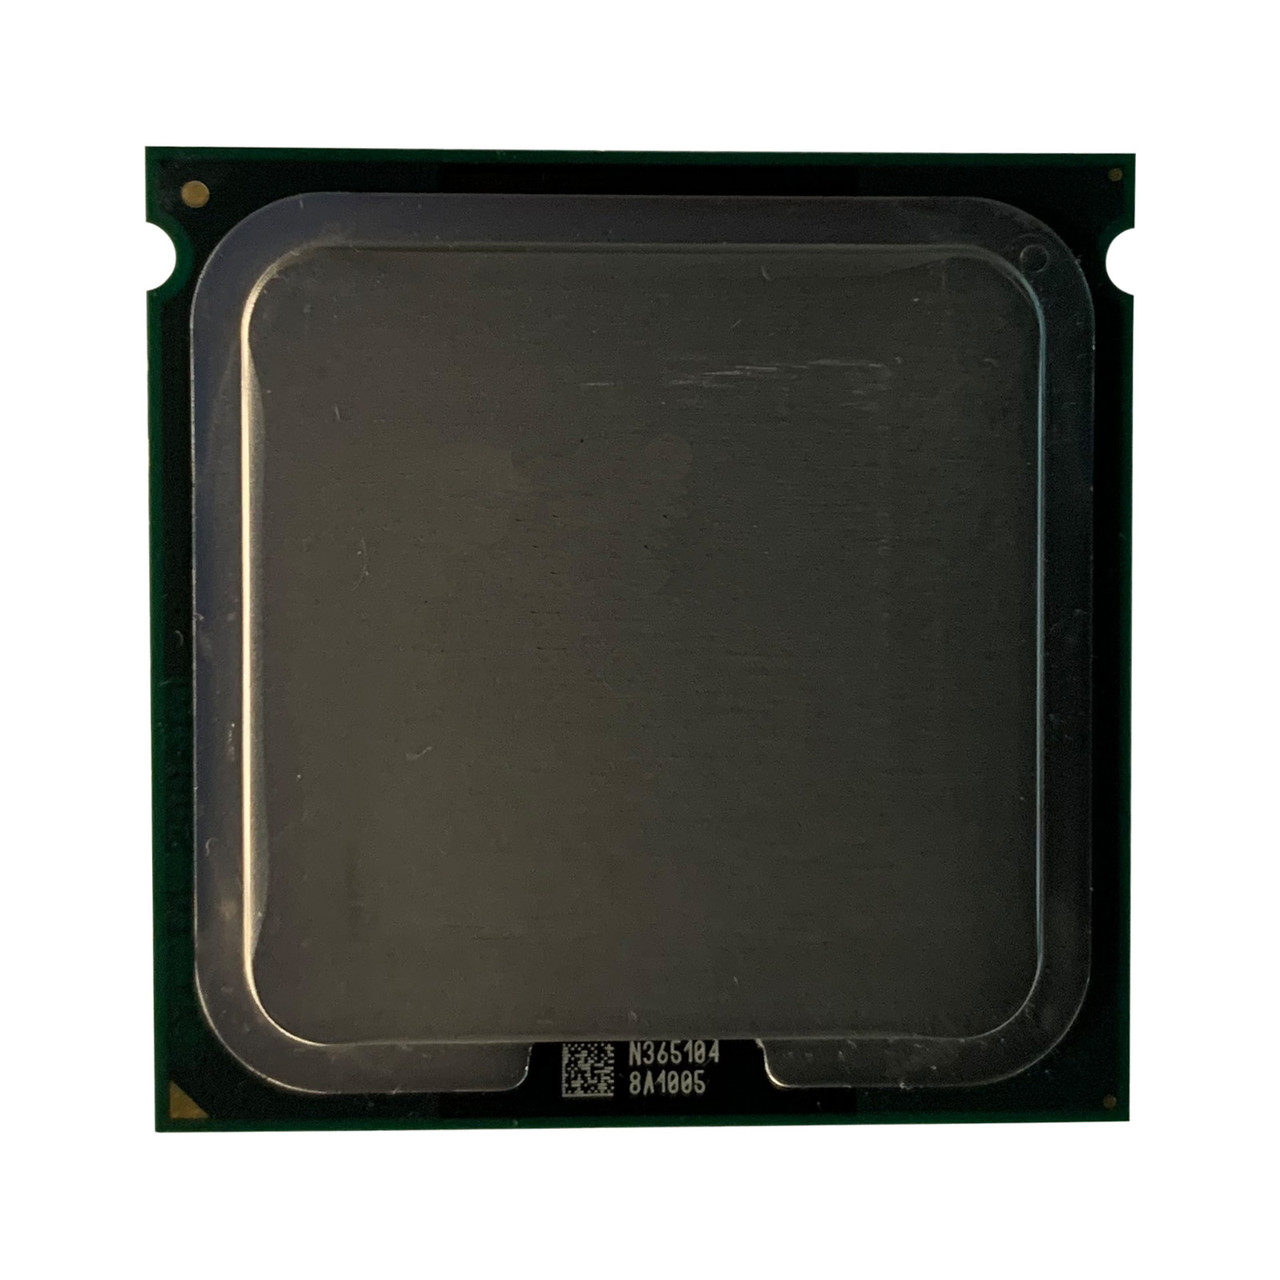 Dell TW952 Xeon 5110 DC 1.6Ghz 4MB 1066FSB Processor